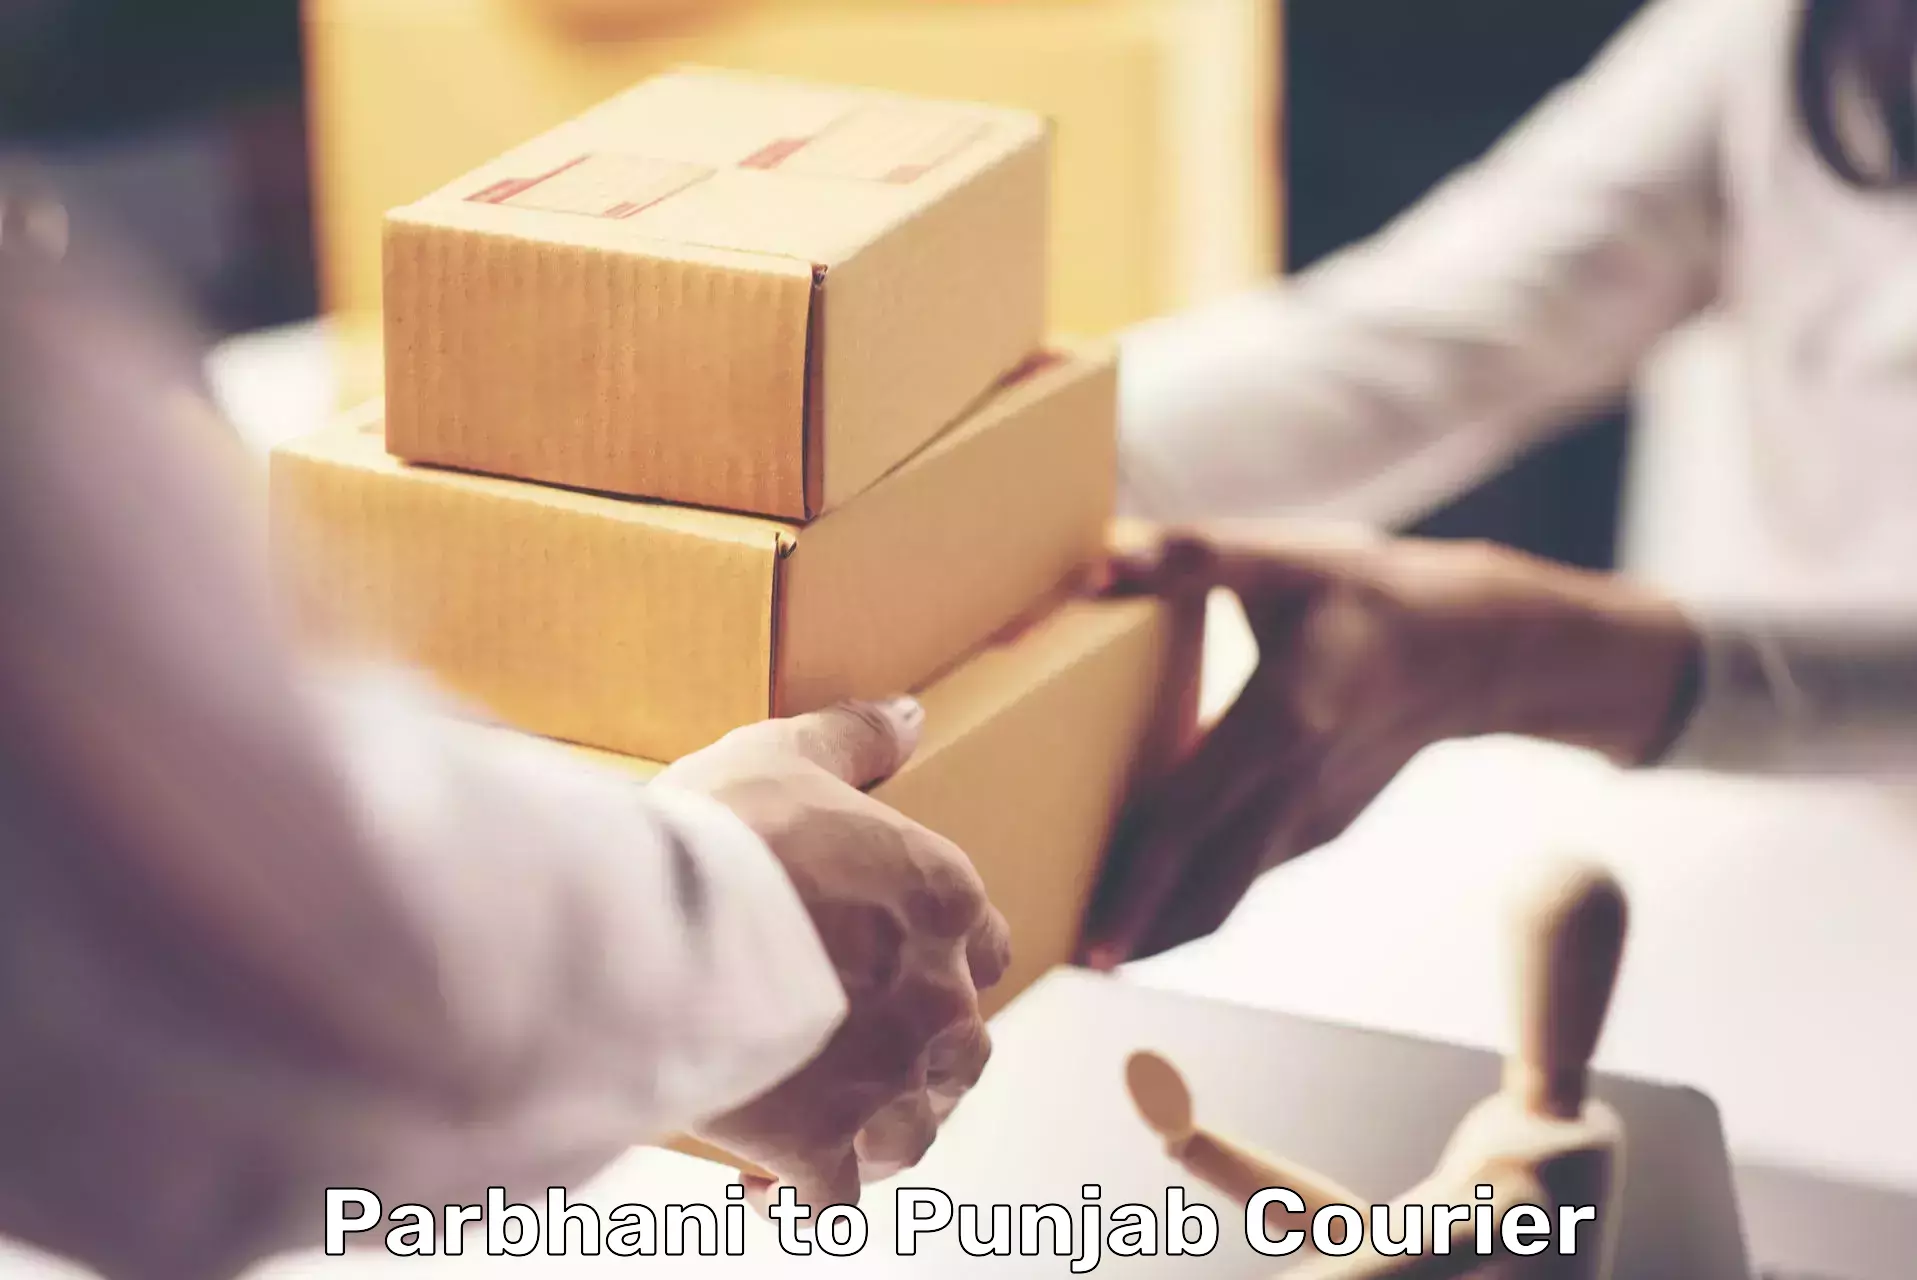 Smart shipping technology Parbhani to Rajpura